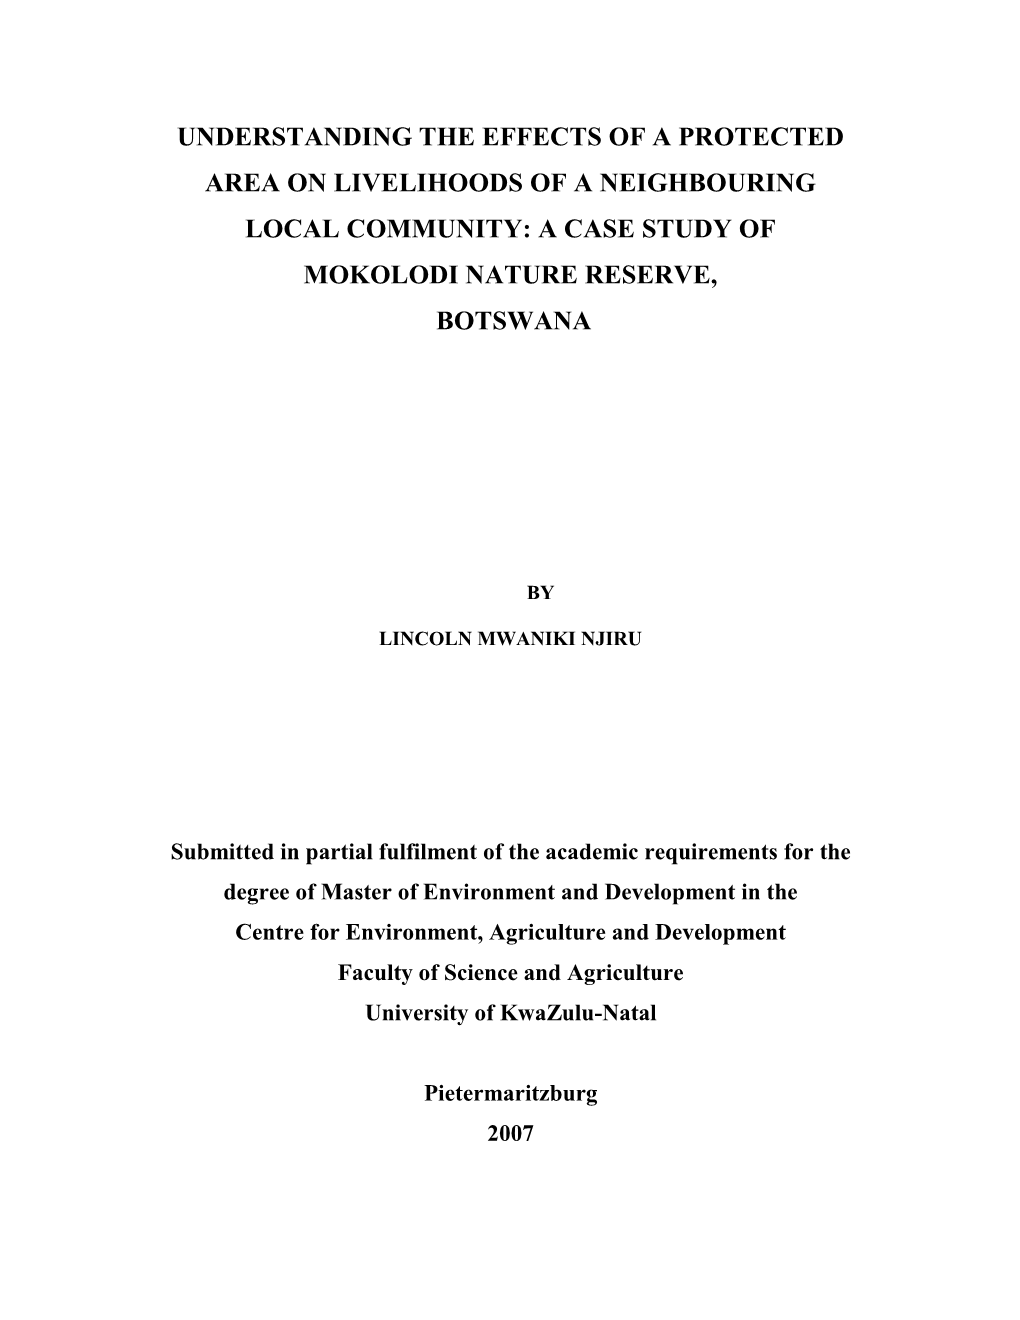 A Case Study of Mokolodi Nature Reserve, Botswana